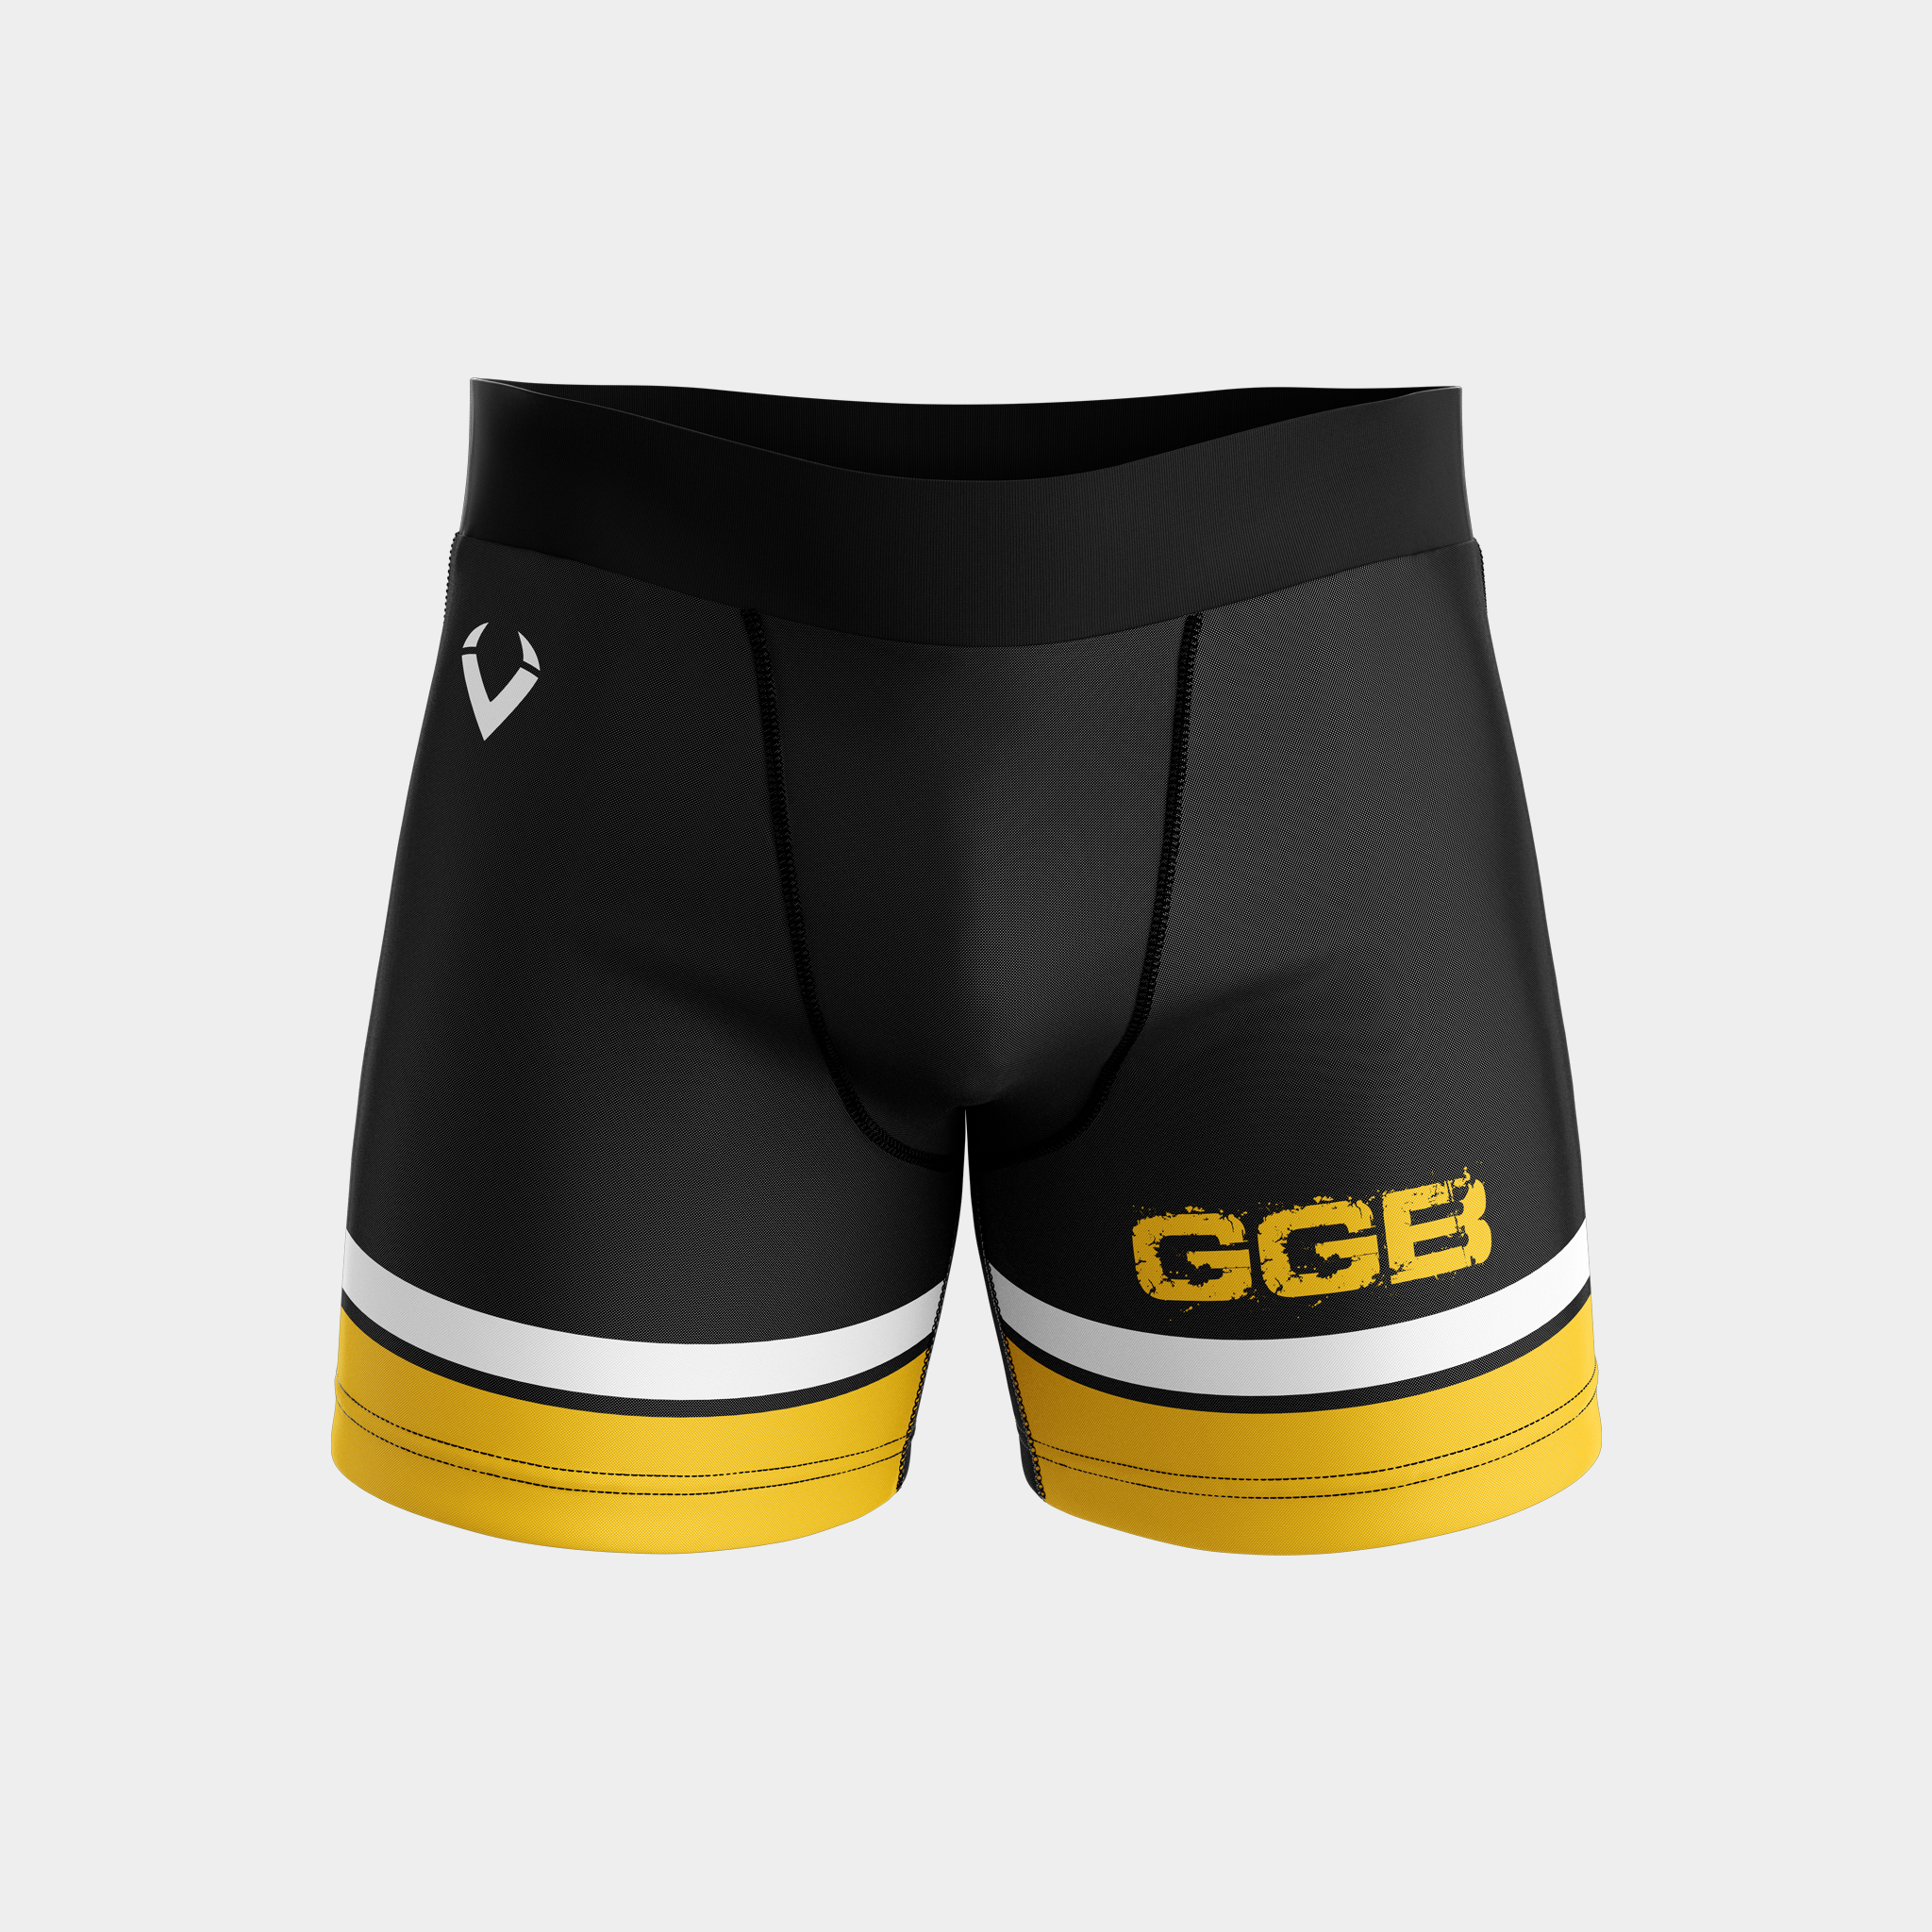 GGB - Compression Short (Design 2)